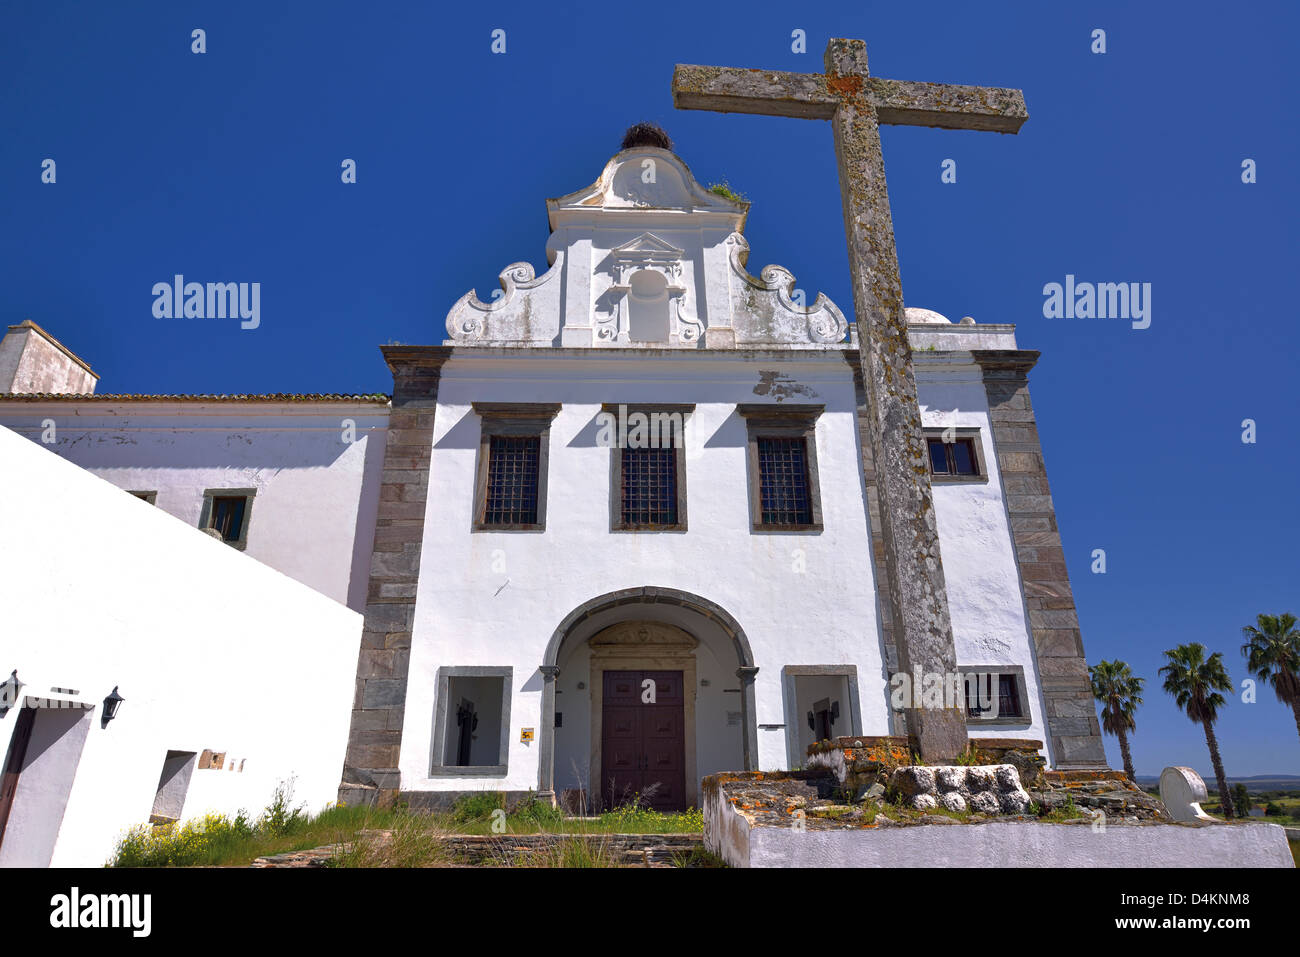 Le Portugal, l'Alentejo : façade principale de l'ancien monastère Convento da Orada dans Monsaraz Banque D'Images